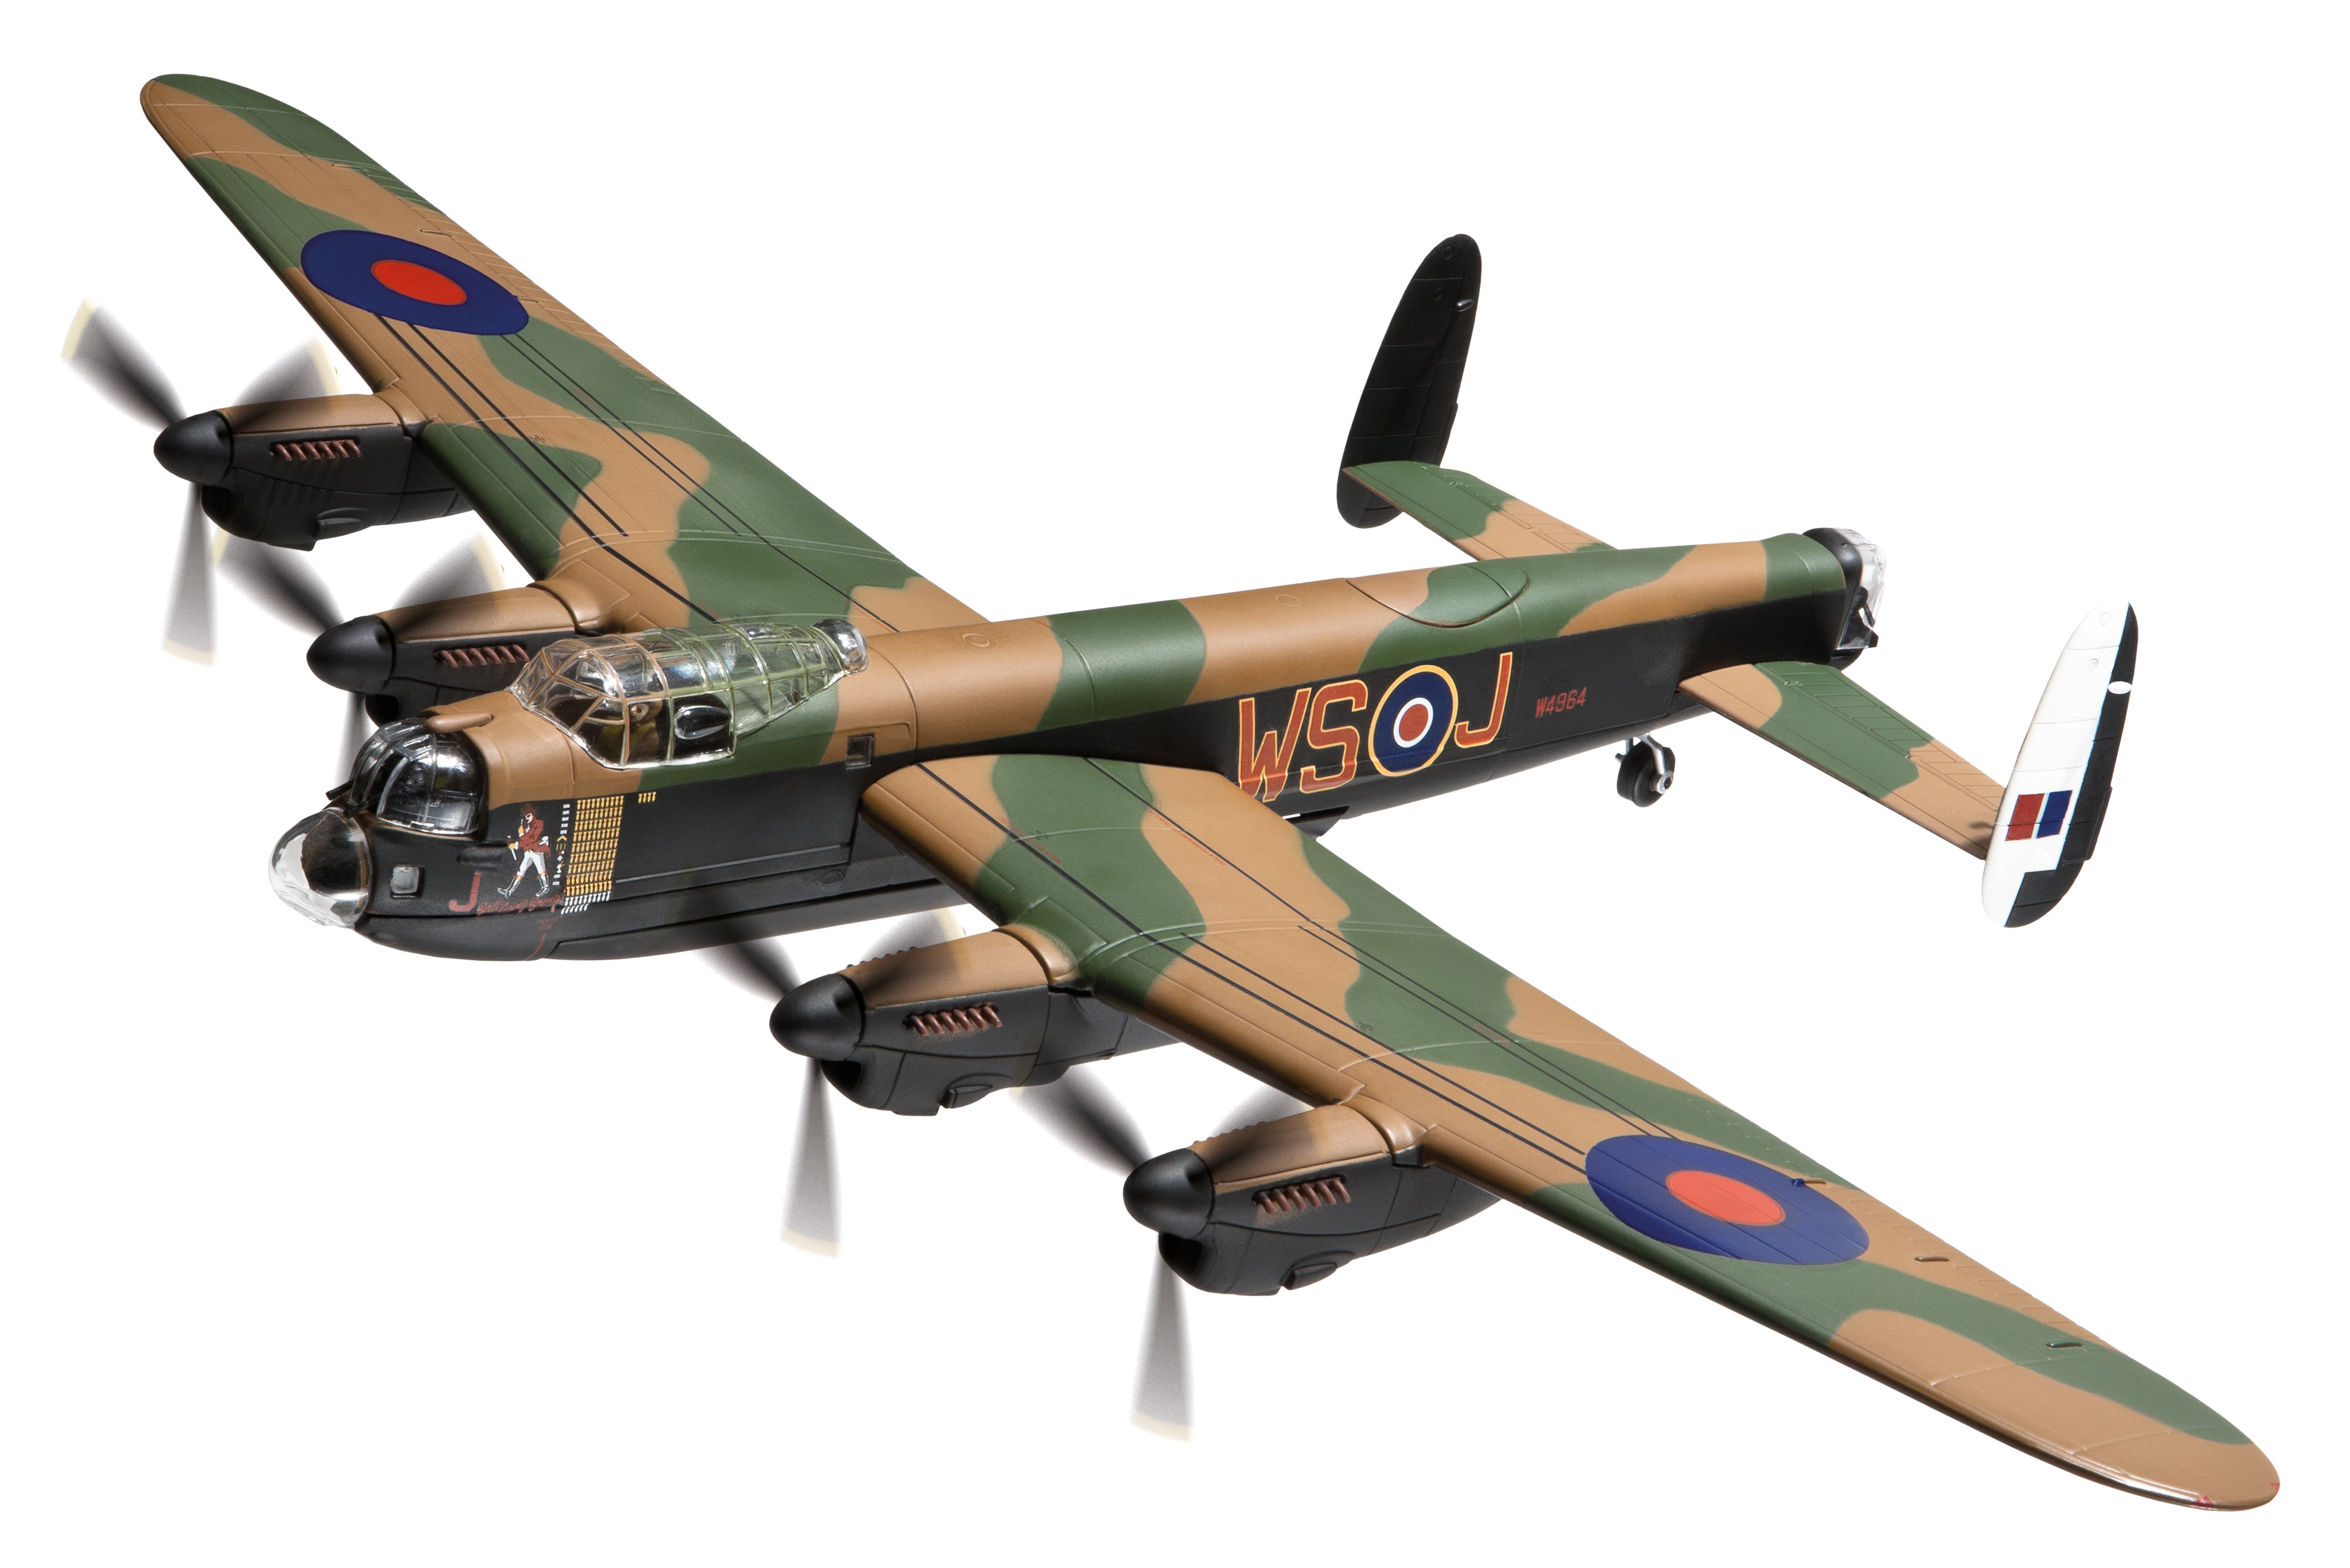 Avro Lancaster Backgrounds on Wallpapers Vista